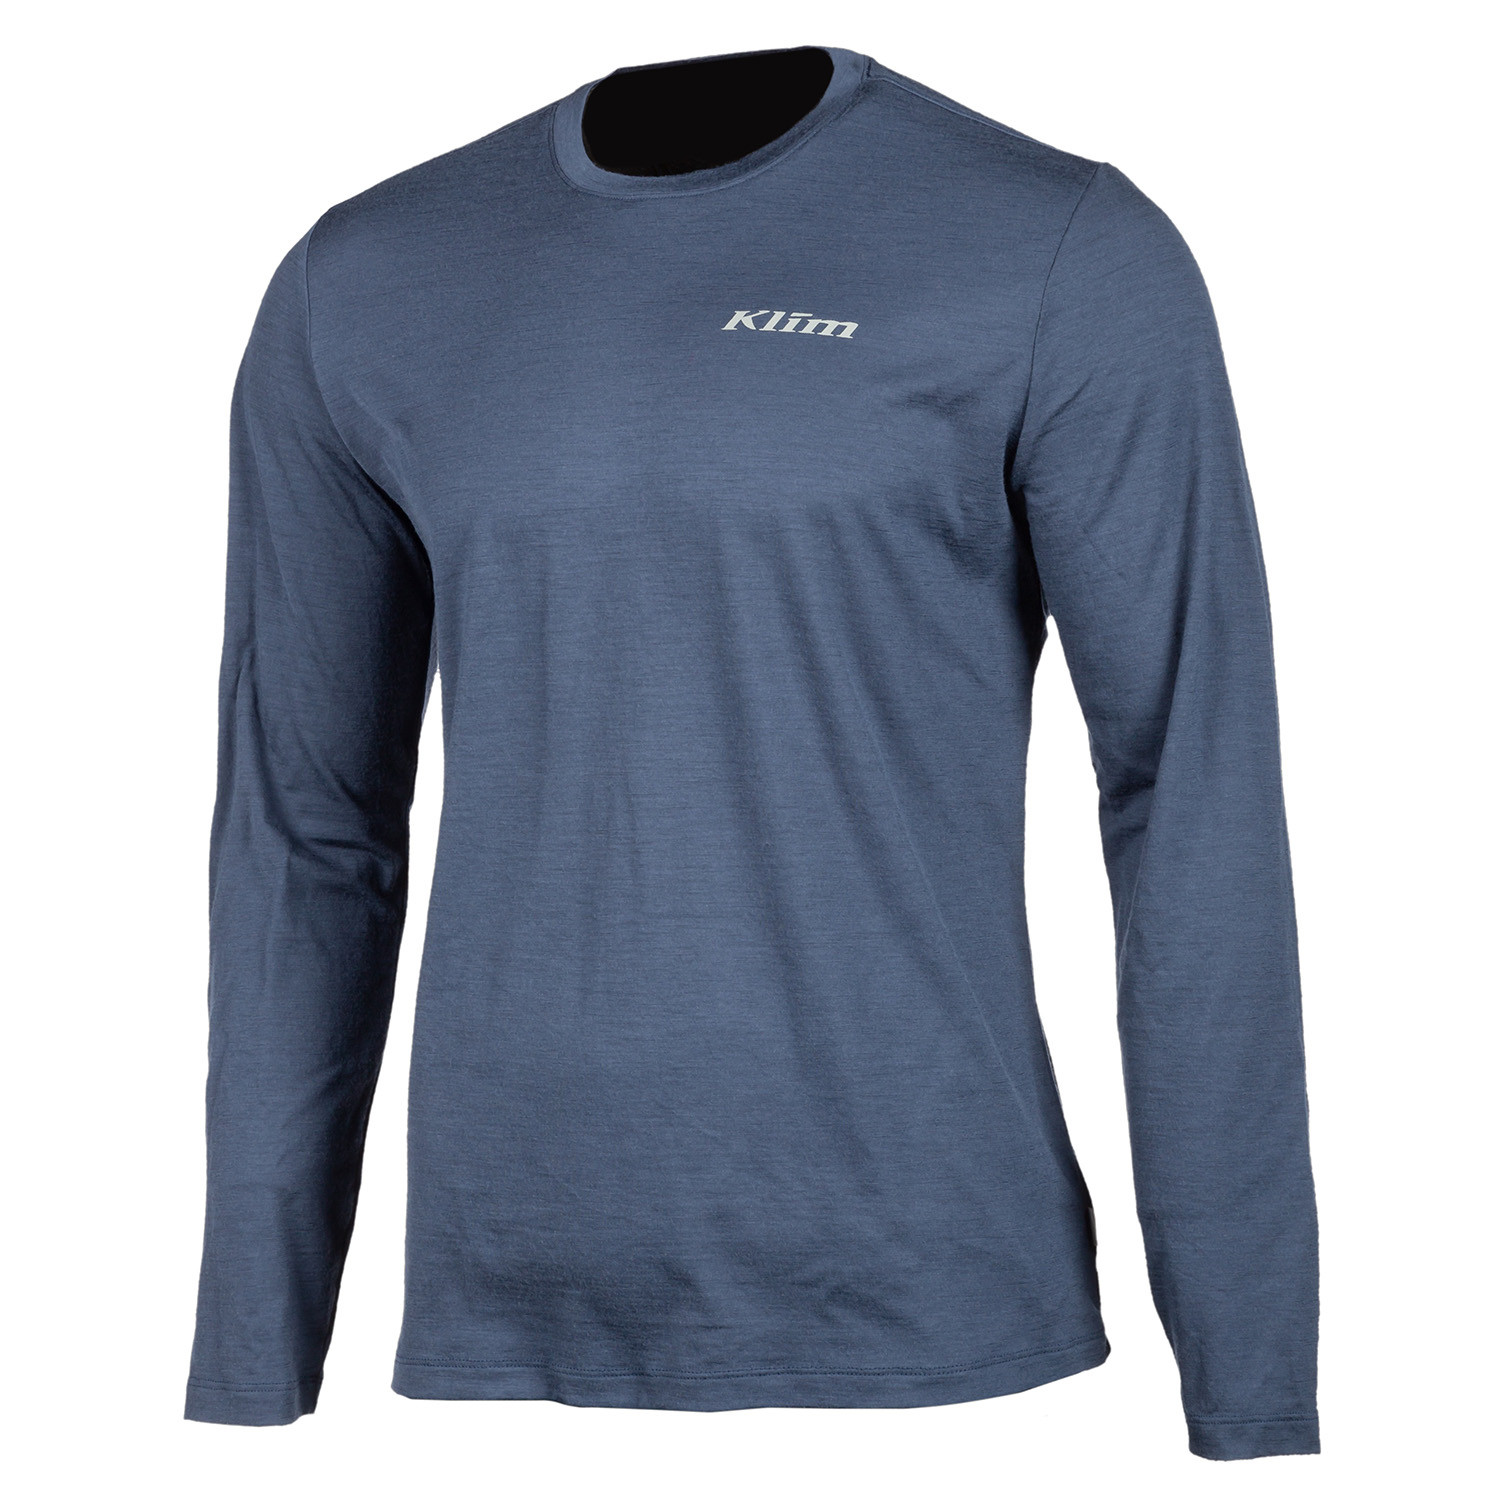 Teton Merino Wool LS Shirt - 3712-001_Blue_01